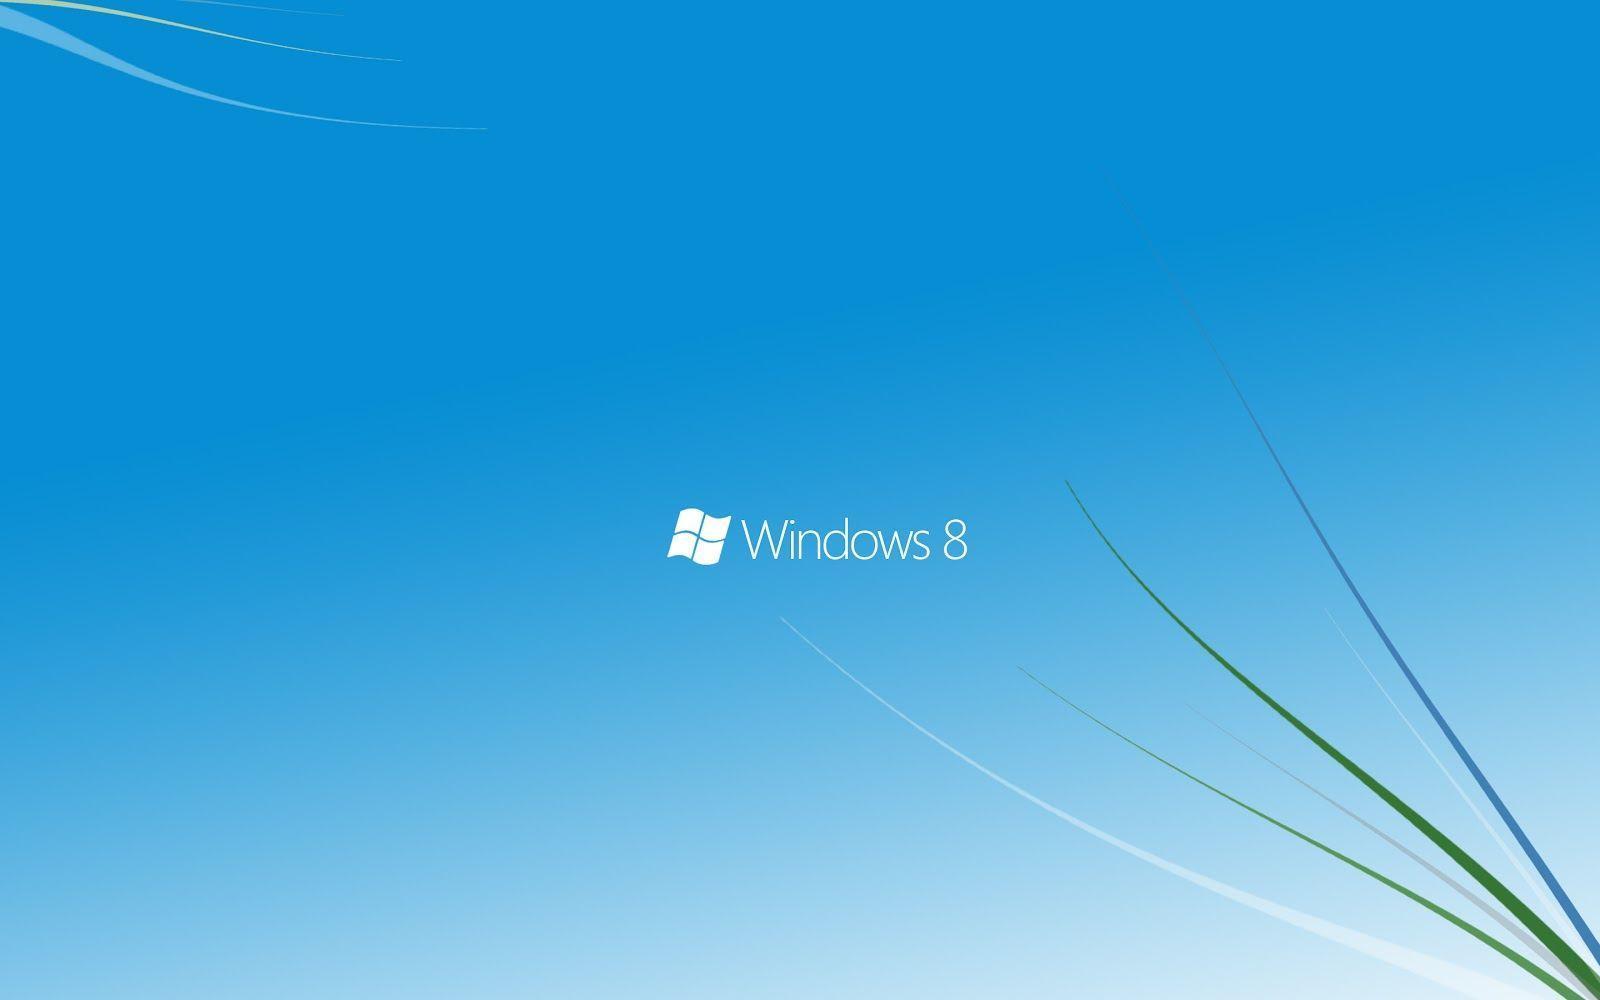 Windows 8 Wallpaper Collection 2013. Windows Server 2012